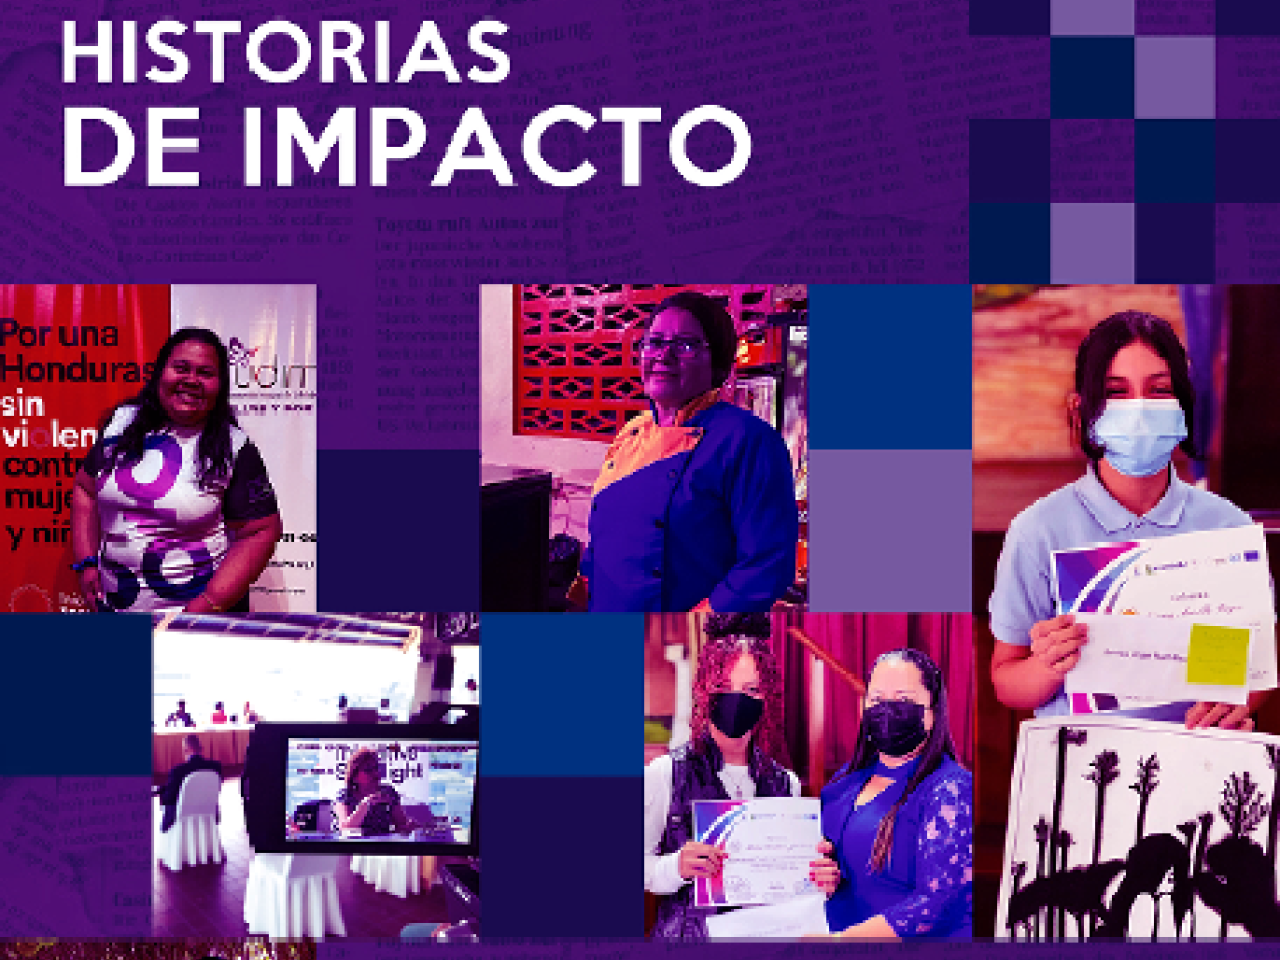 Photos of women on purple background